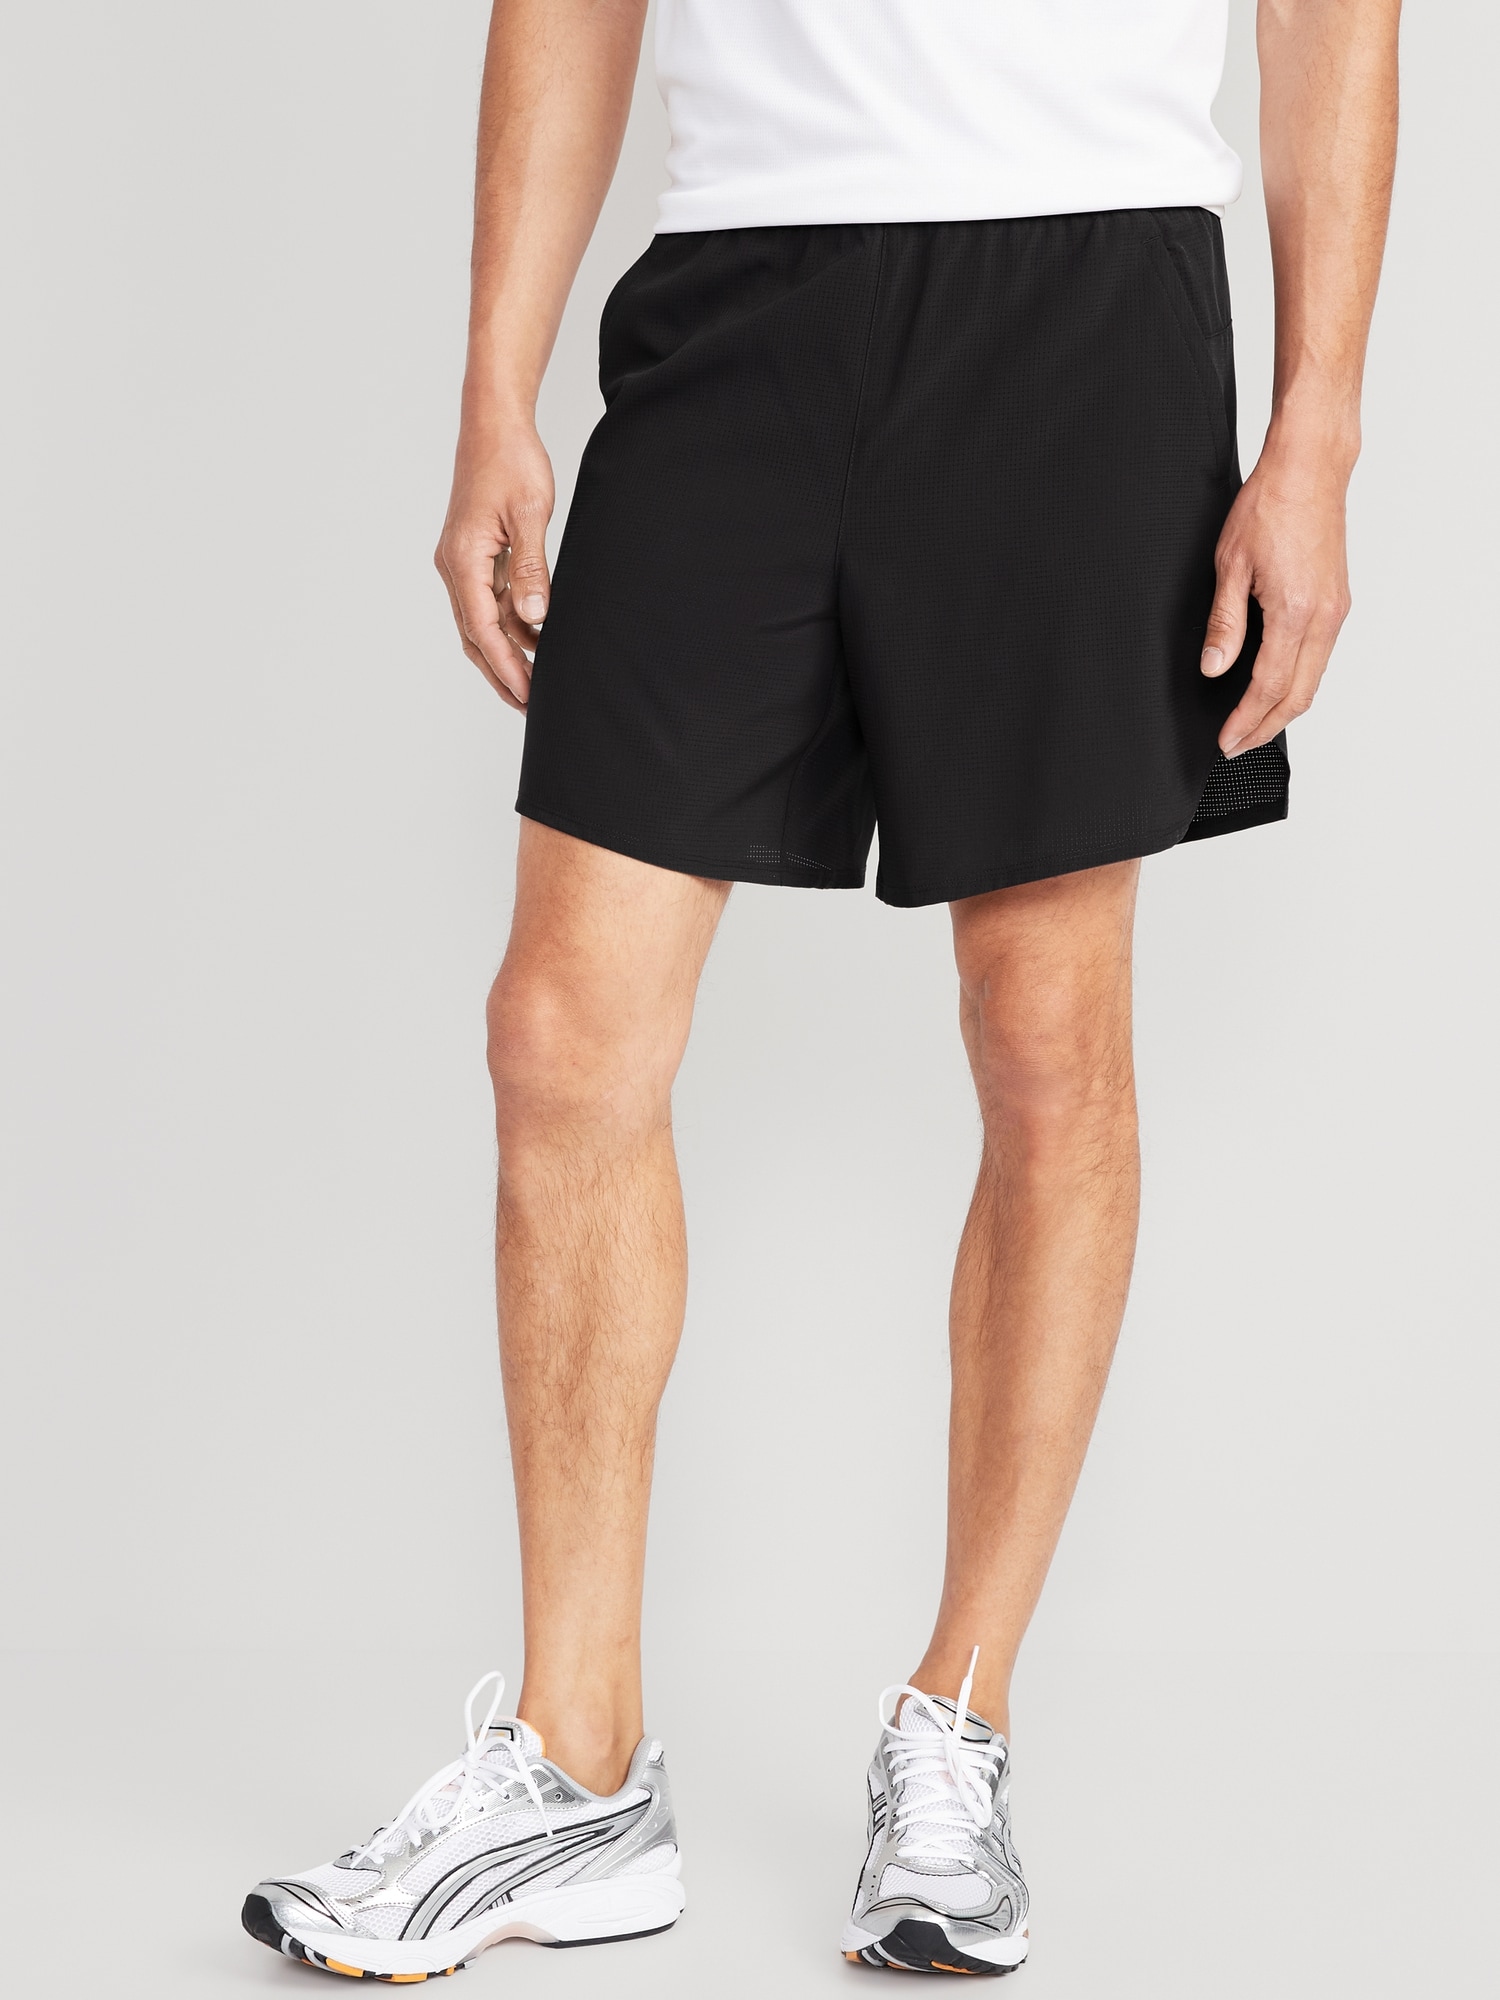 StretchTech Lined Run Shorts -- 7-inch inseam Hot Deal